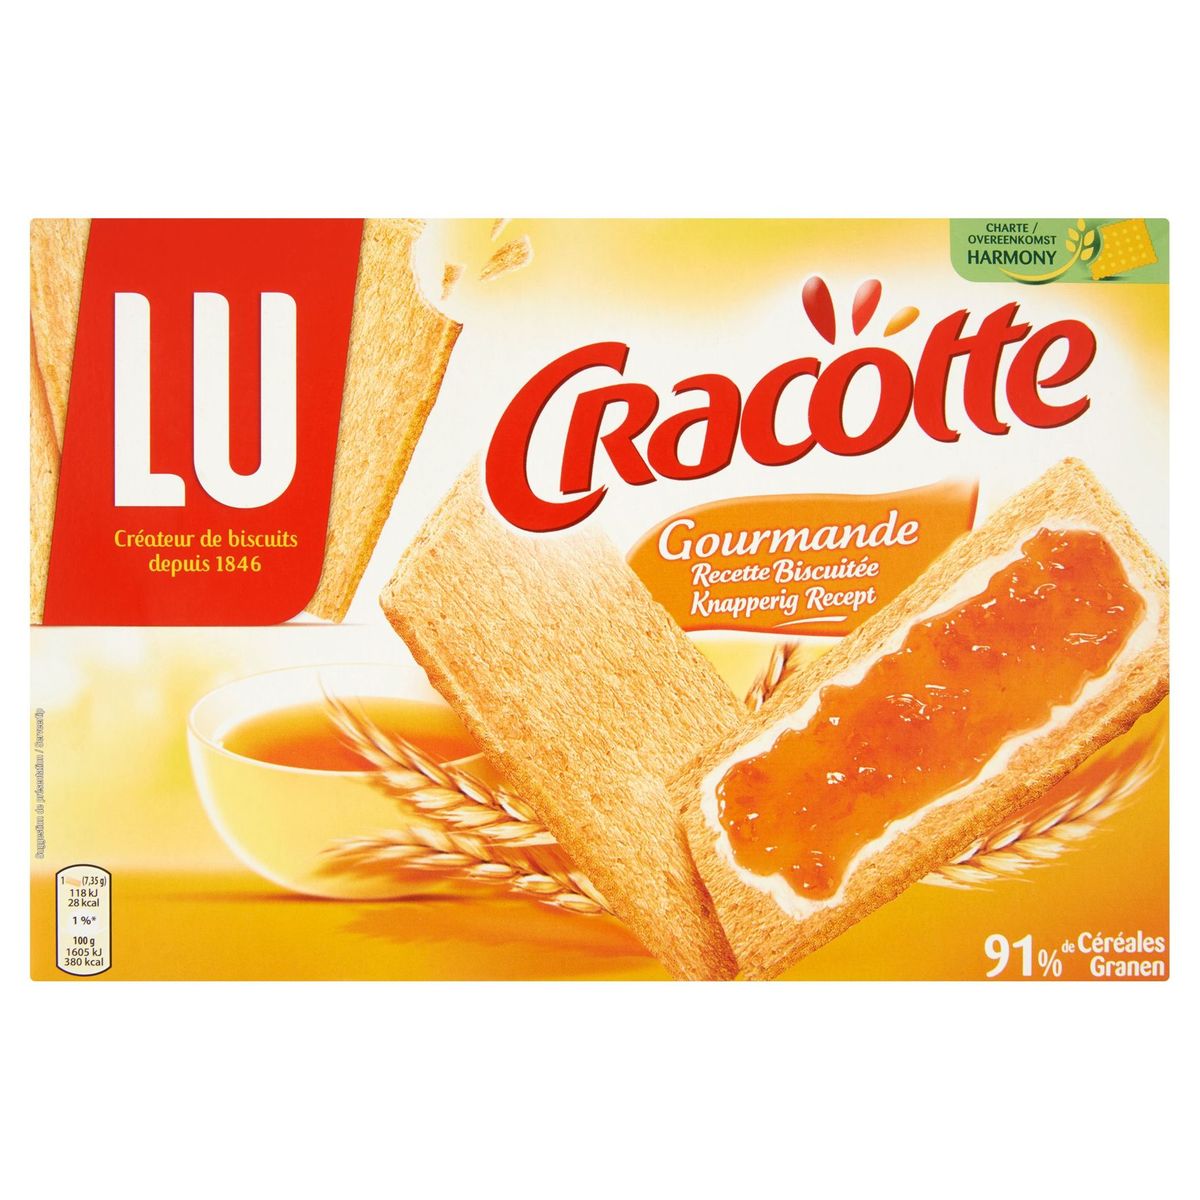 LU Cracotte Gourmande Recette Biscuitée 250 g